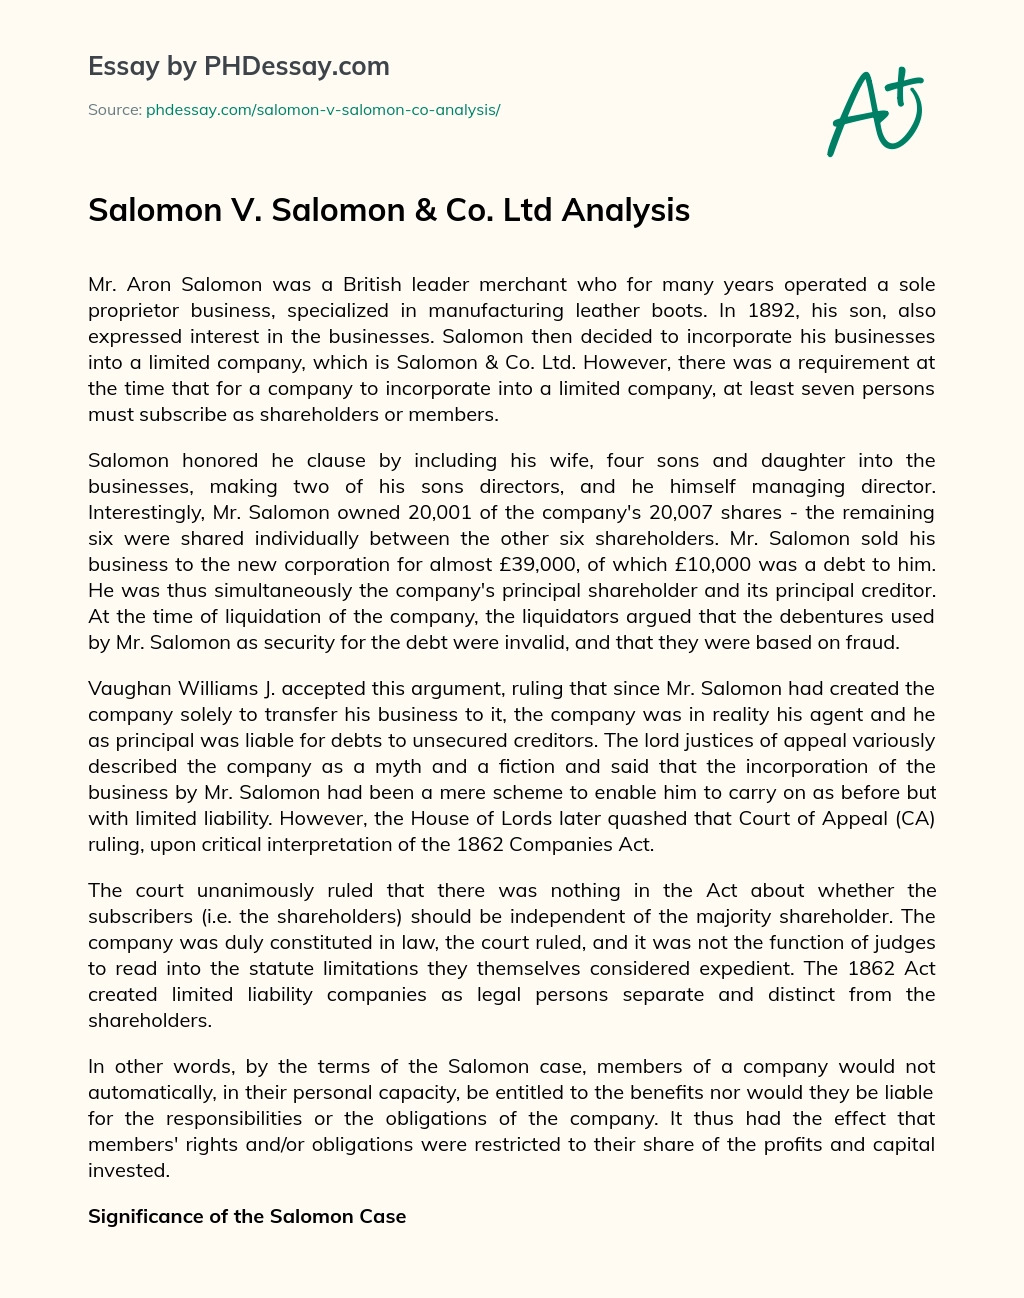 Salomon V. Salomon & Co. Ltd Analysis essay